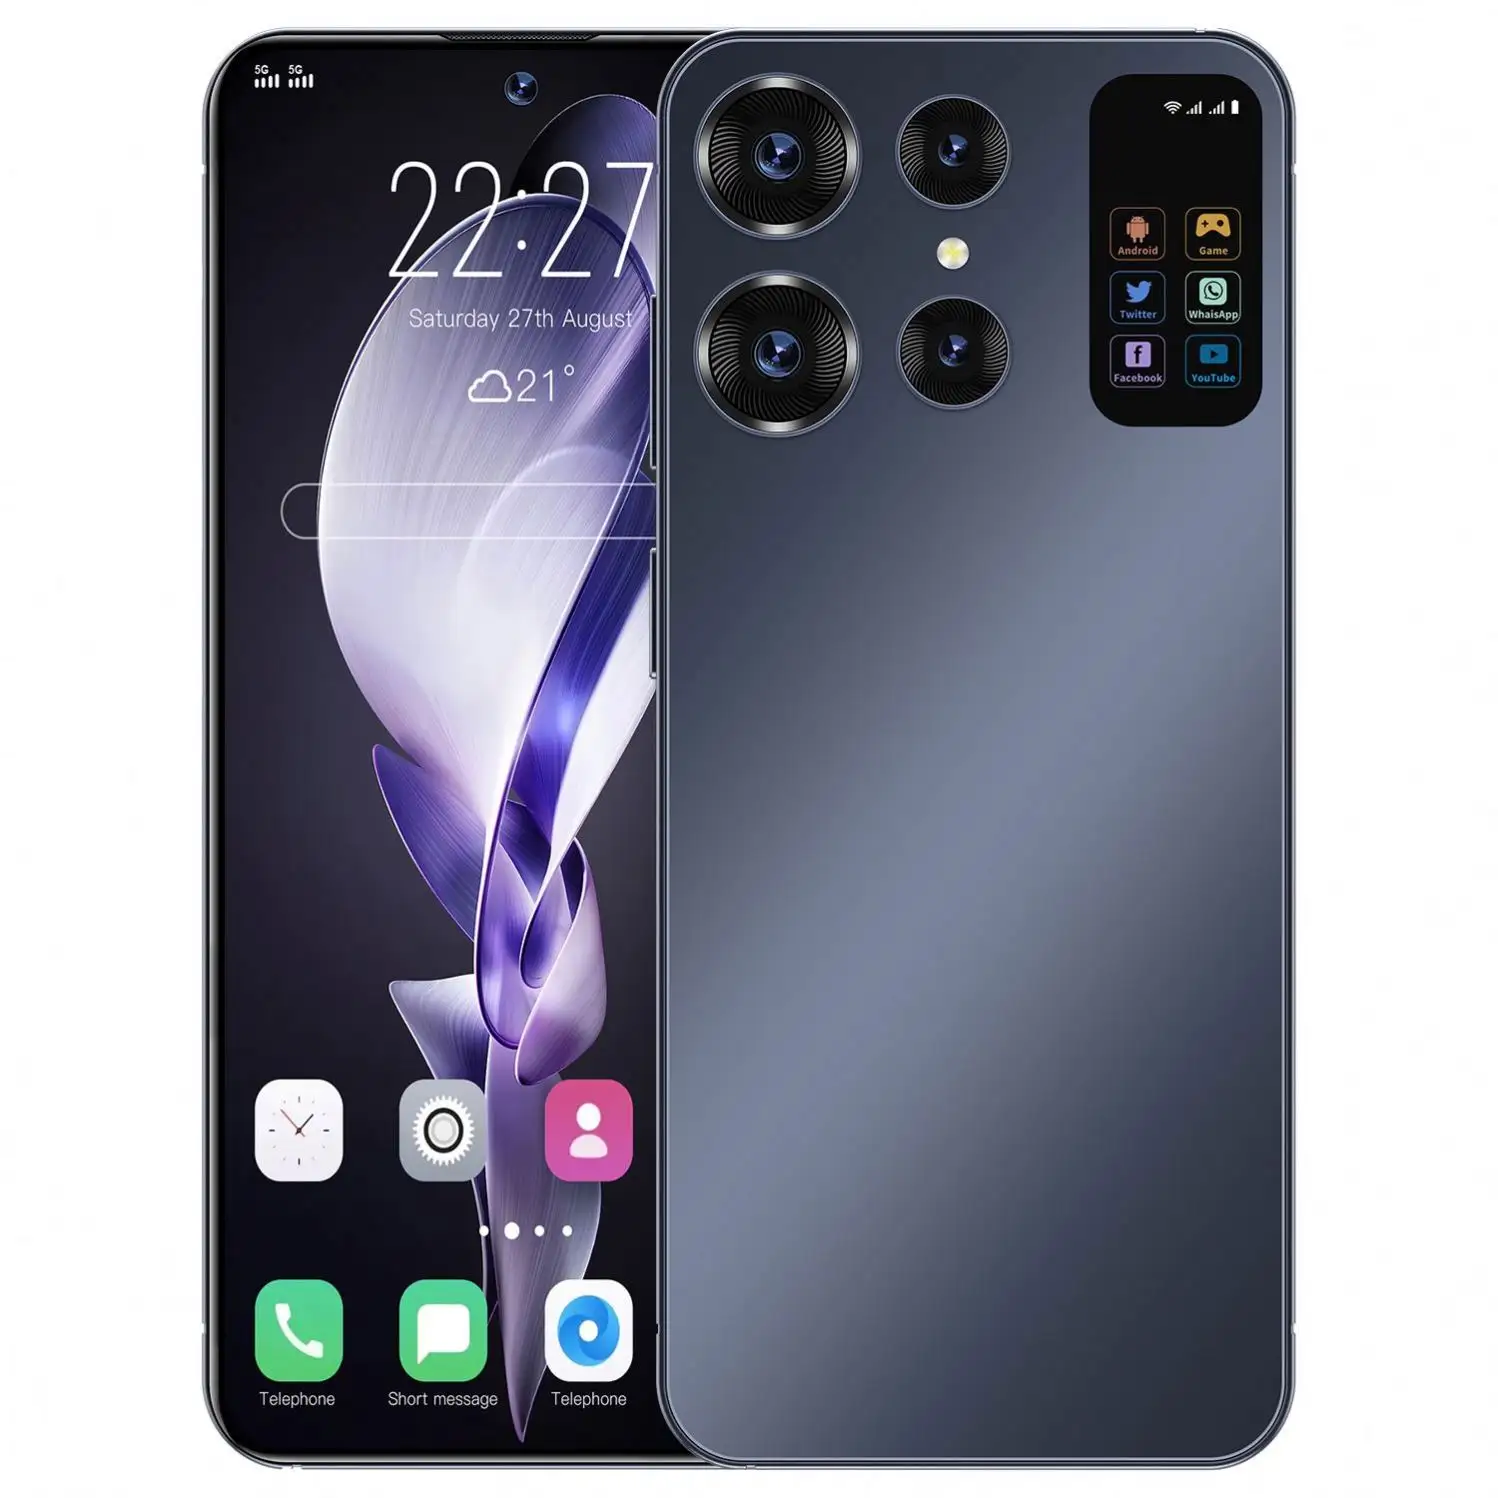 TAYA OEM Original S 24 Ultra S24 5Gสมาร์ทโฟน 7.3 นิ้วหน้าจอ LCDปลดล็อกGlobal Editionโทรศัพท์มือถือDrop Shipping